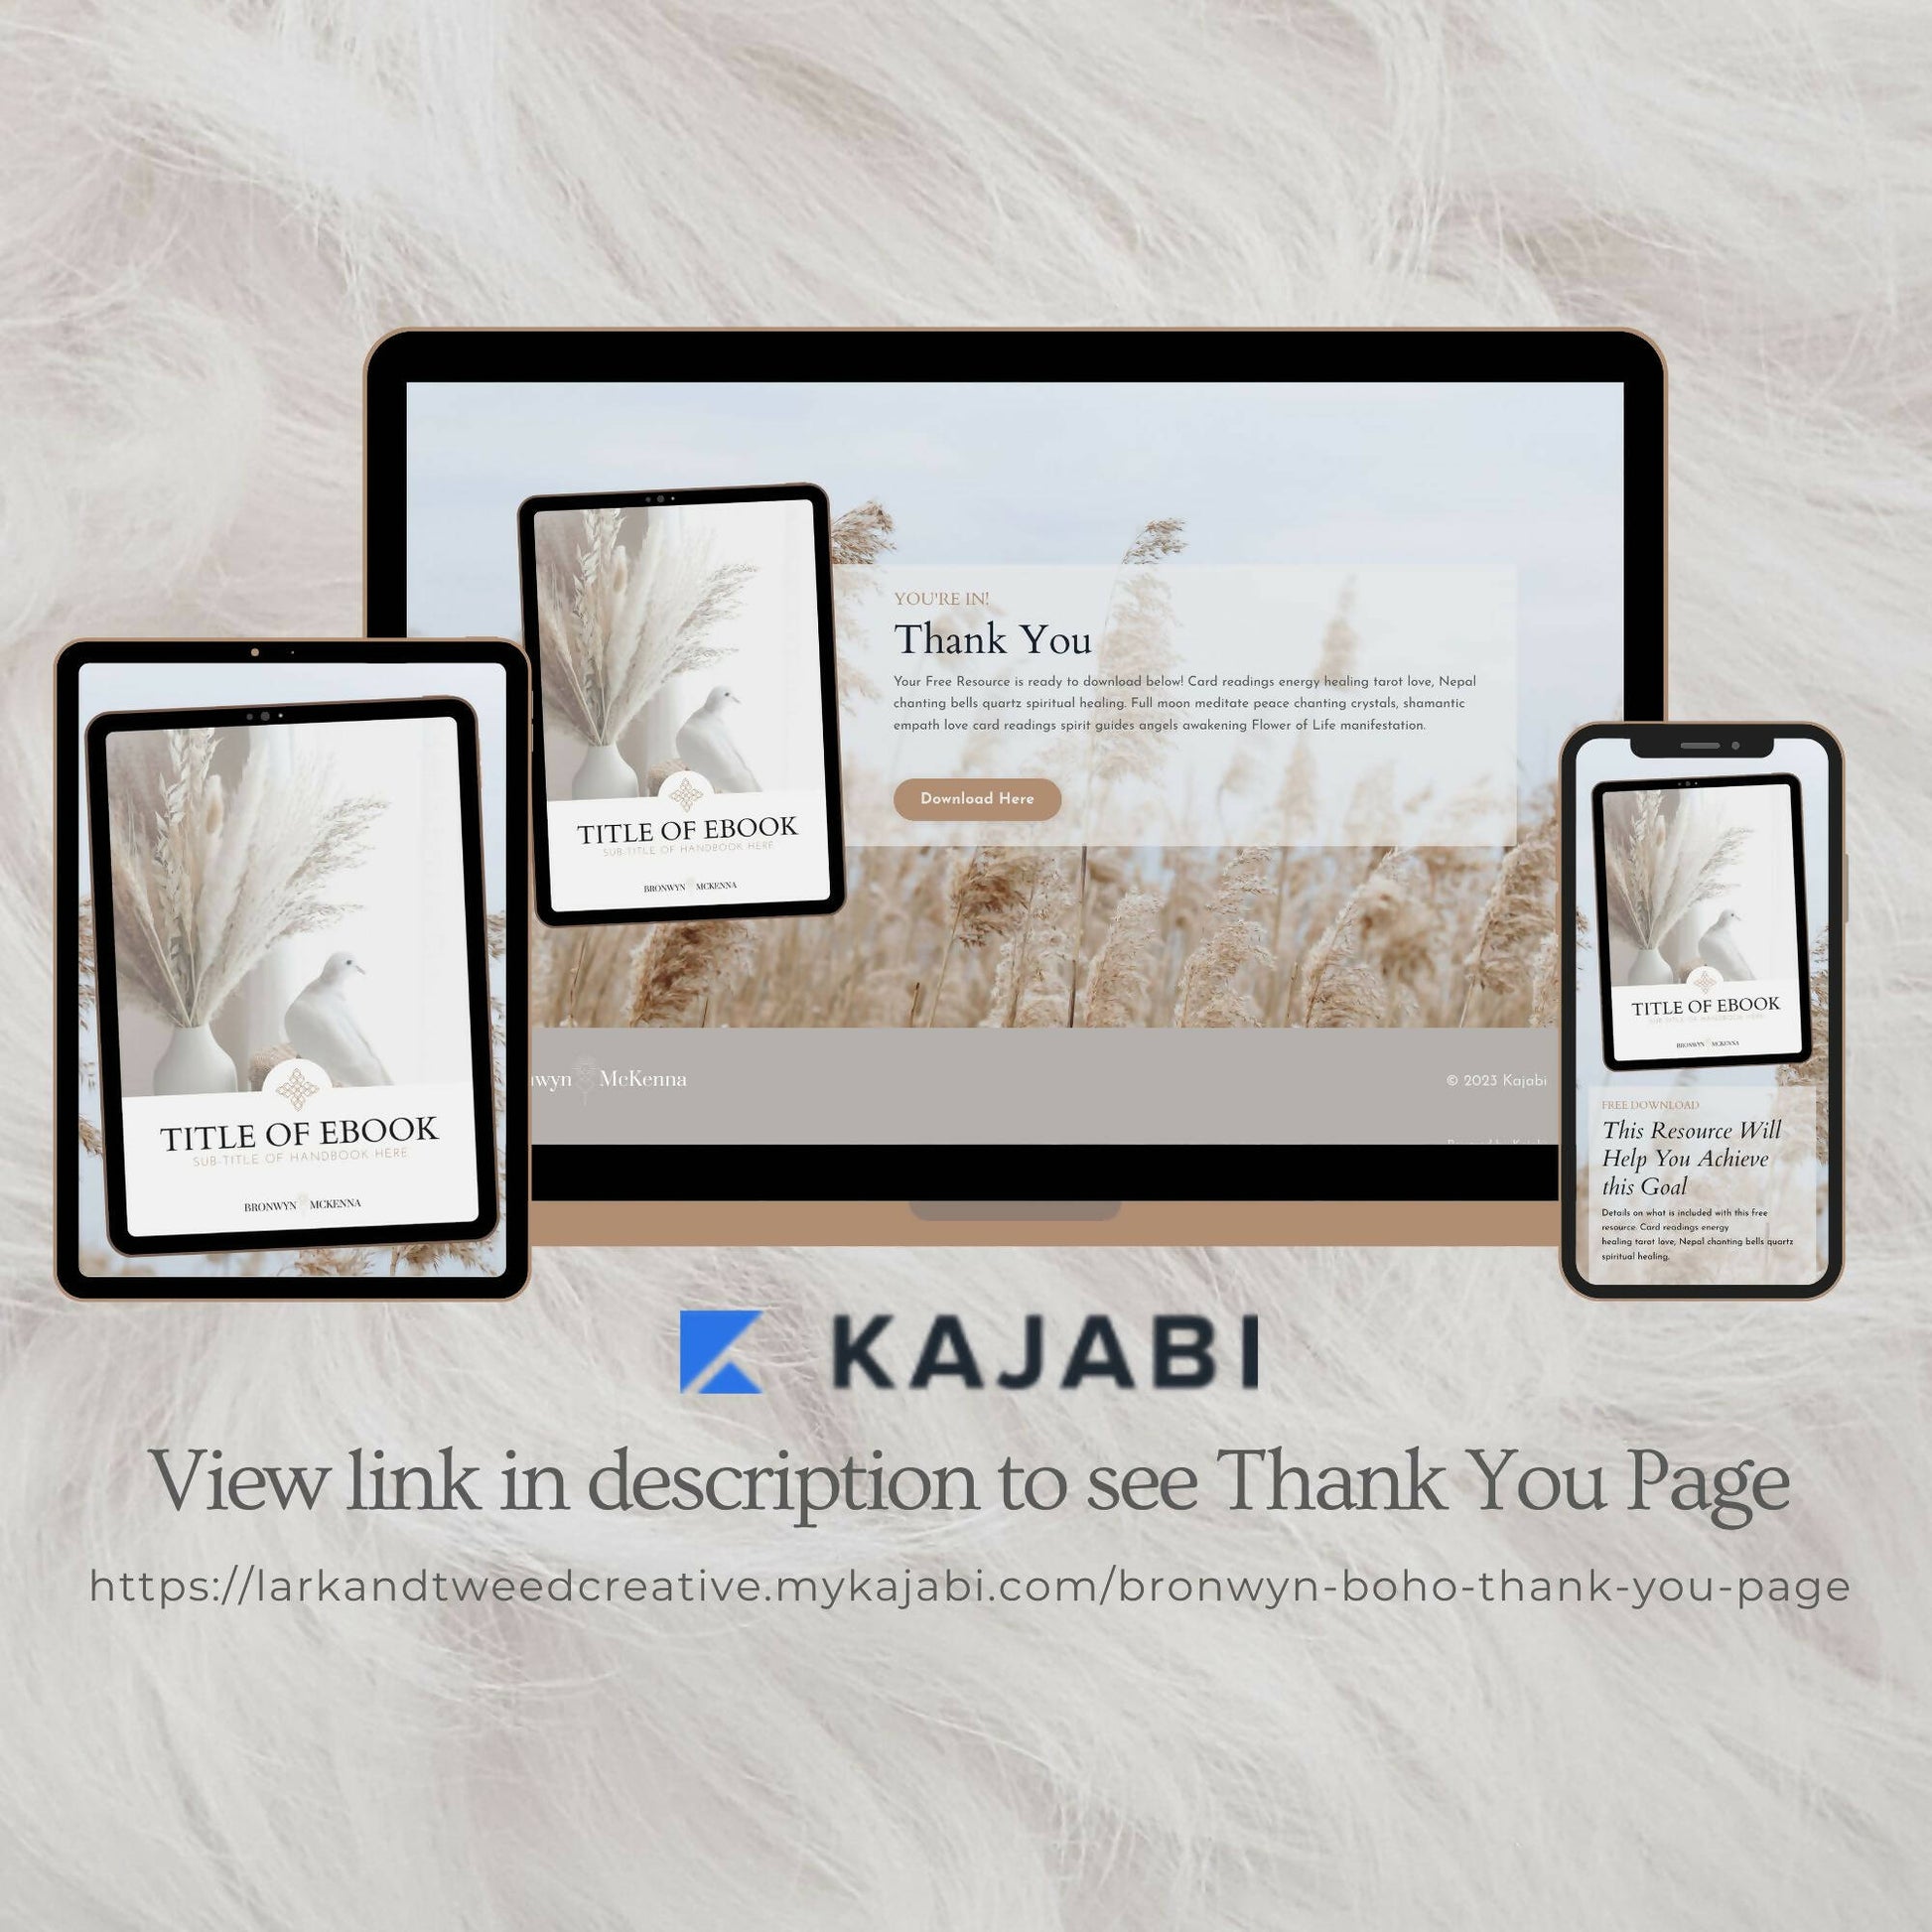 kajabi-thank-you-template-coach-course-creator06